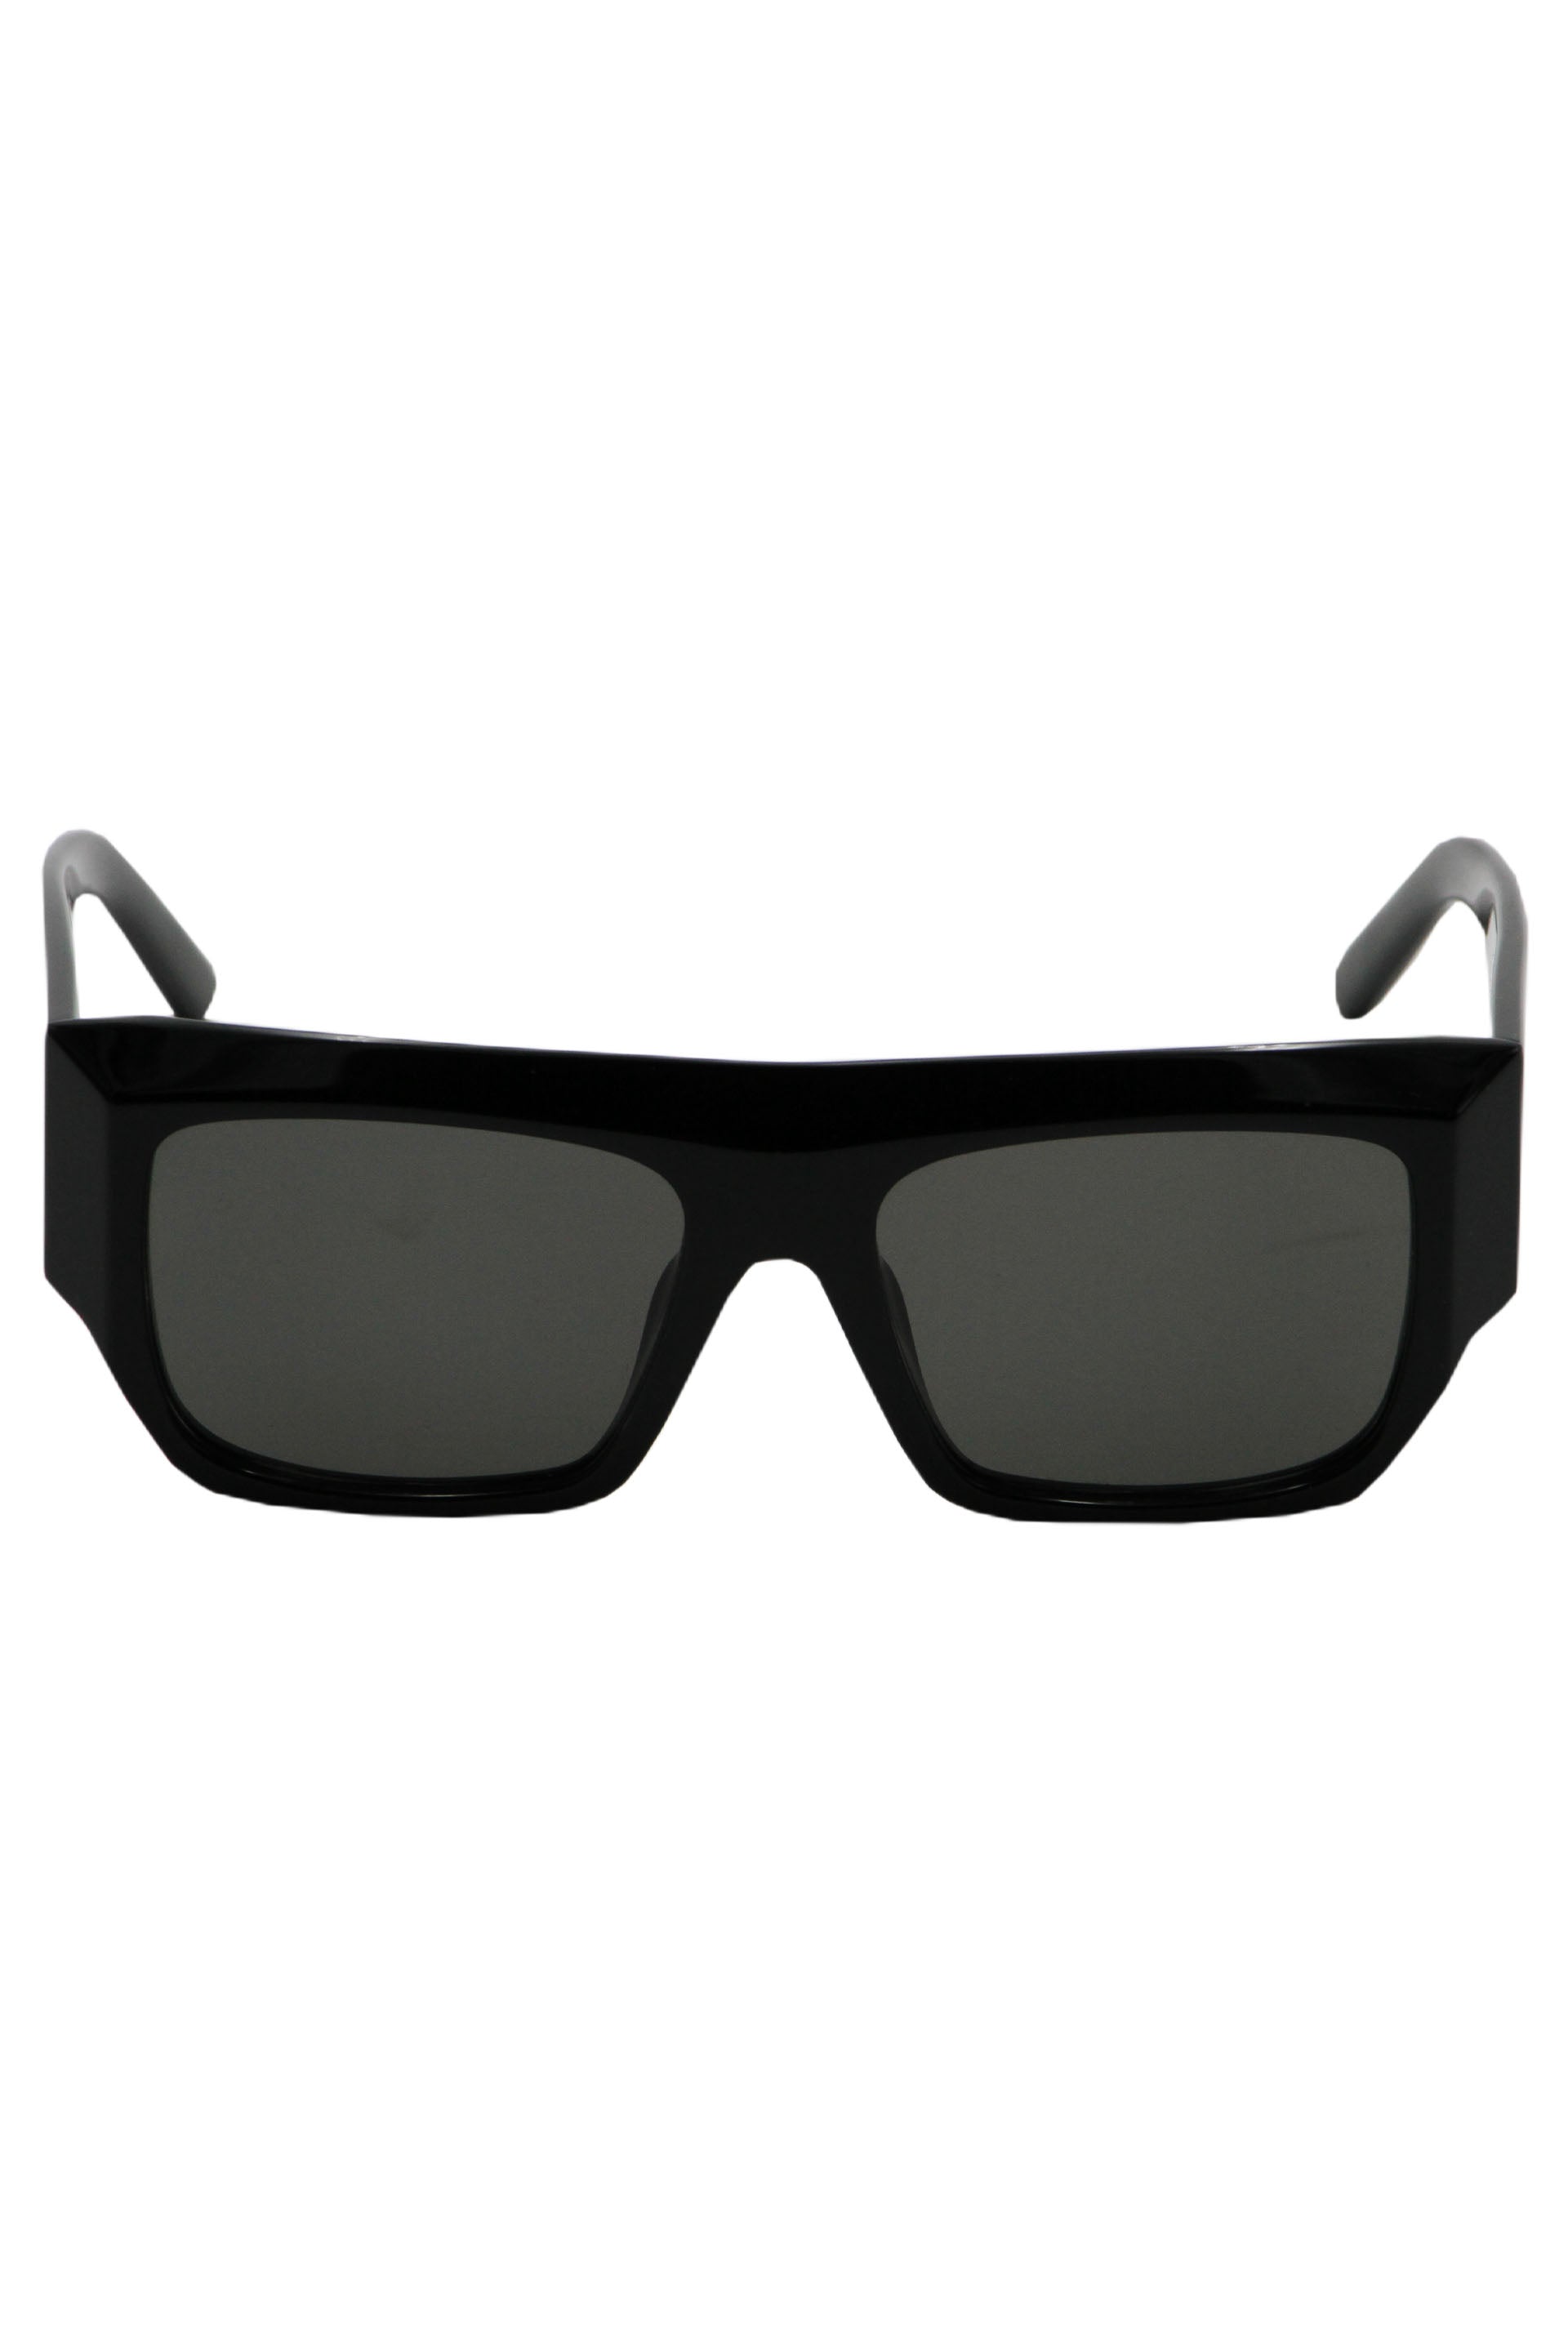 Palm-Angels-OUTLET-SALE-Blanca-rectangular-frame-sunglasses-Sonnenbrille-TU-ARCHIVE-COLLECTION.jpg